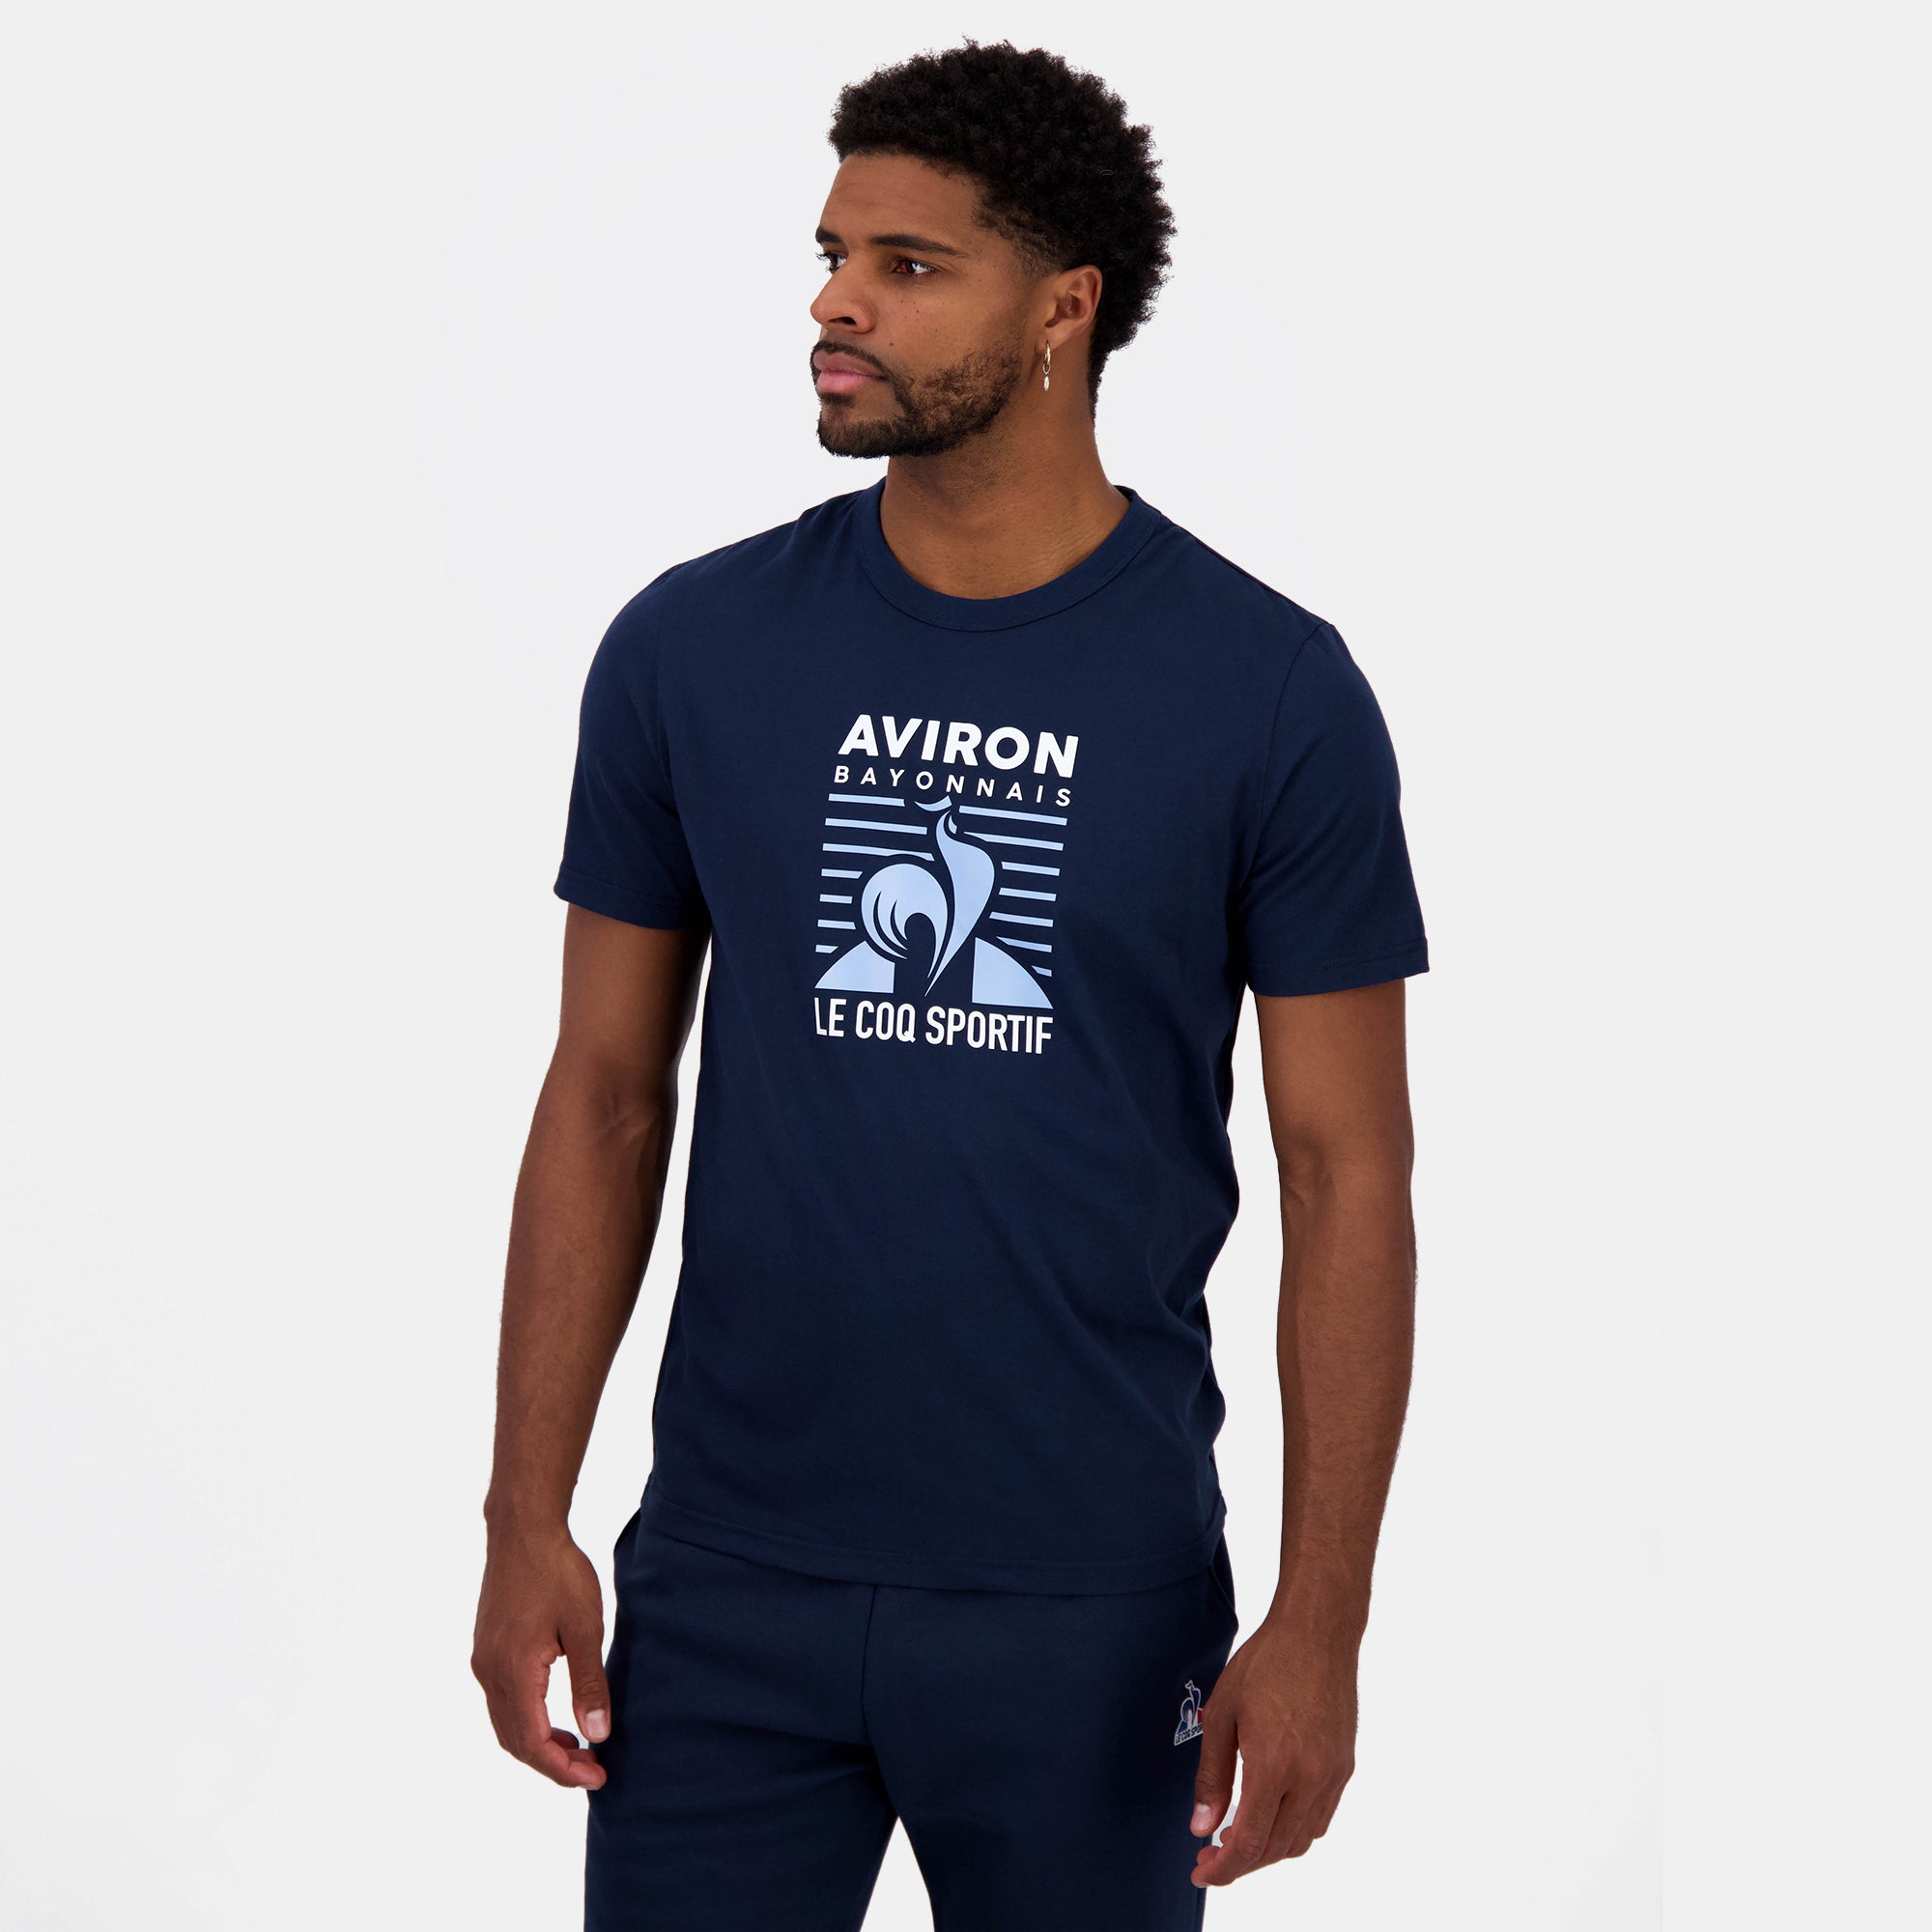 2422785-AB FANWEAR Tee SS N°2 M dress blues  | T-Shirt for men